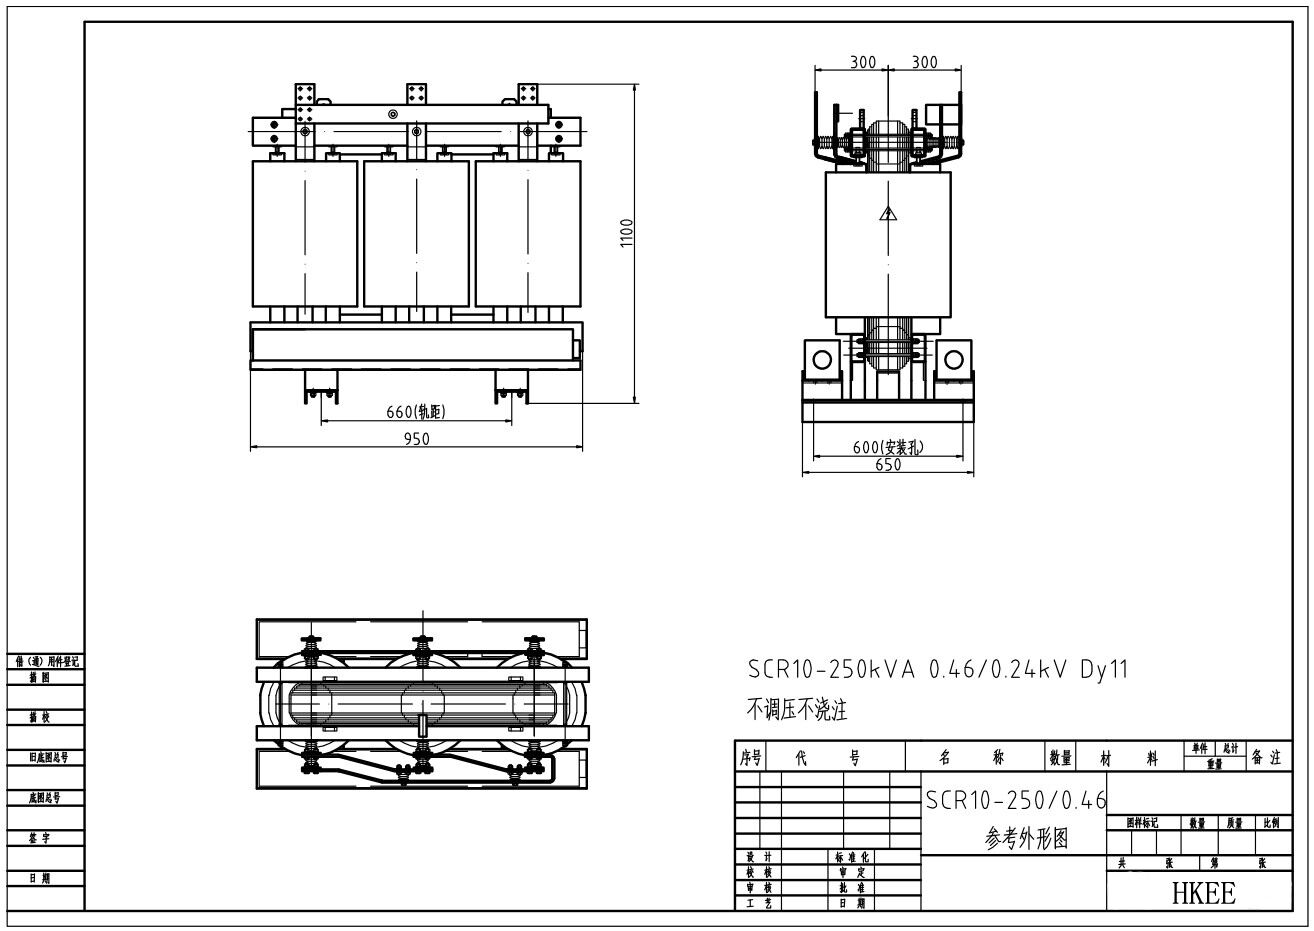 Three Phase Dry Type 1000 volts Transformer Substation 11kv 20kv 36kv Switching Equipment manufacture